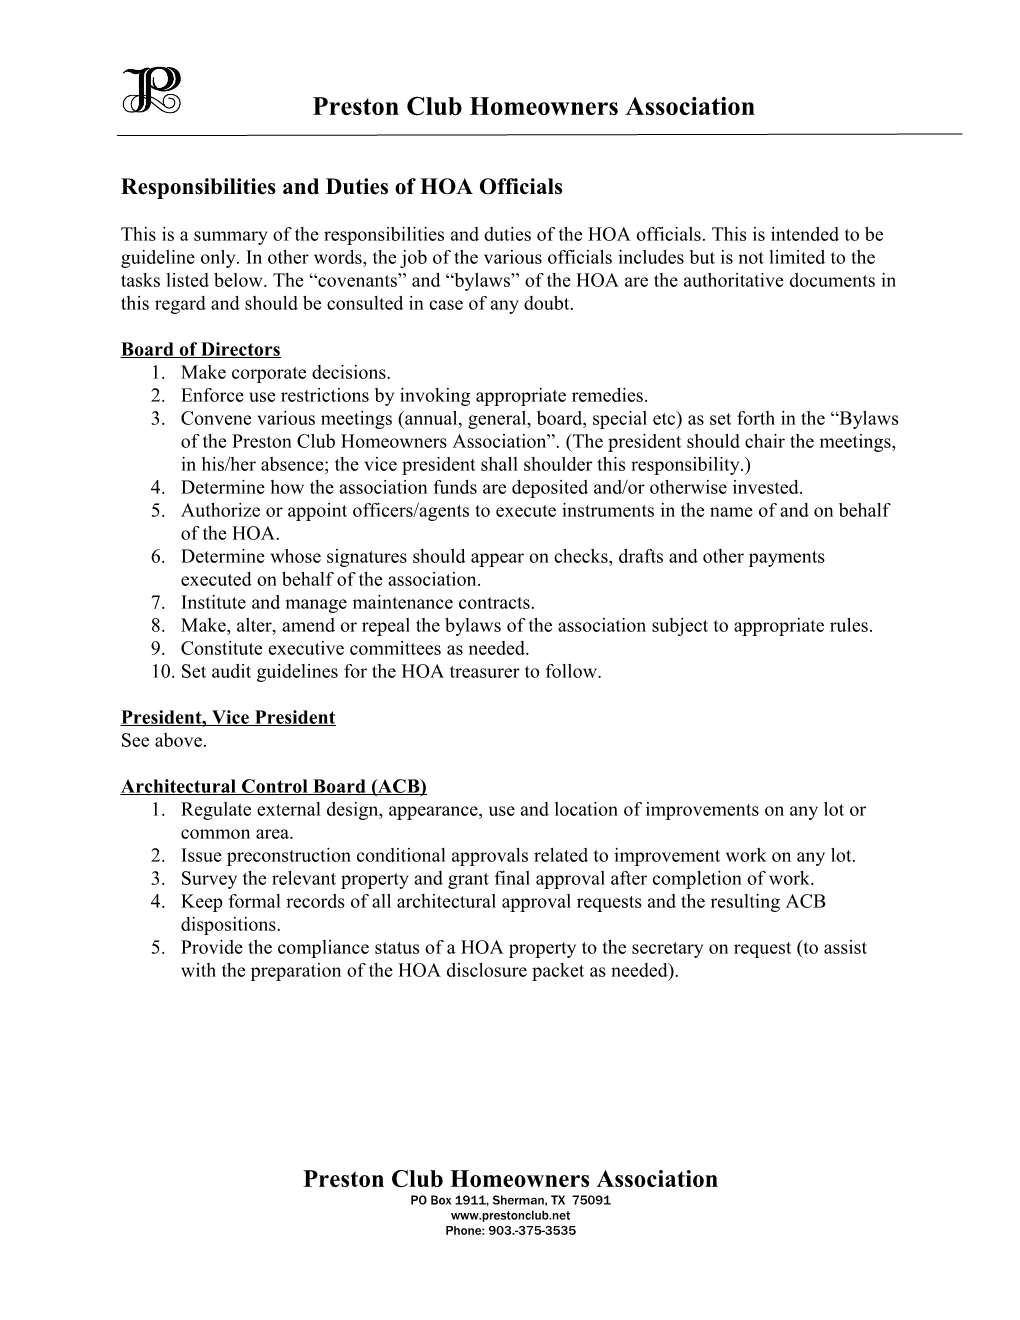 Responsibilities And Duties Of Various HOA Officials